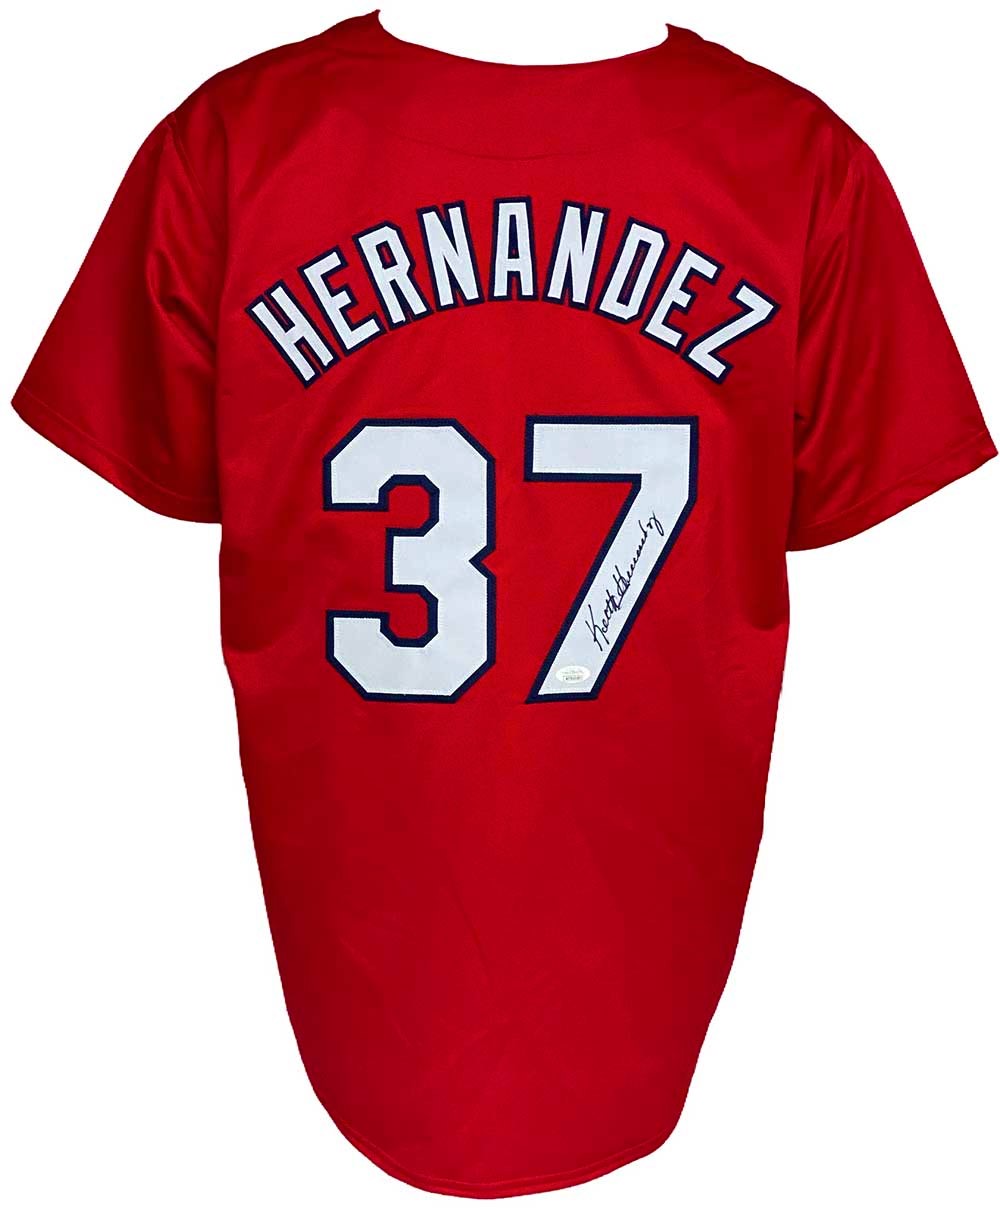 Autographed Keith Hernandez MLB Photos, Autographed Photos, Keith Hernandez  MLB Autographed Memorabilia